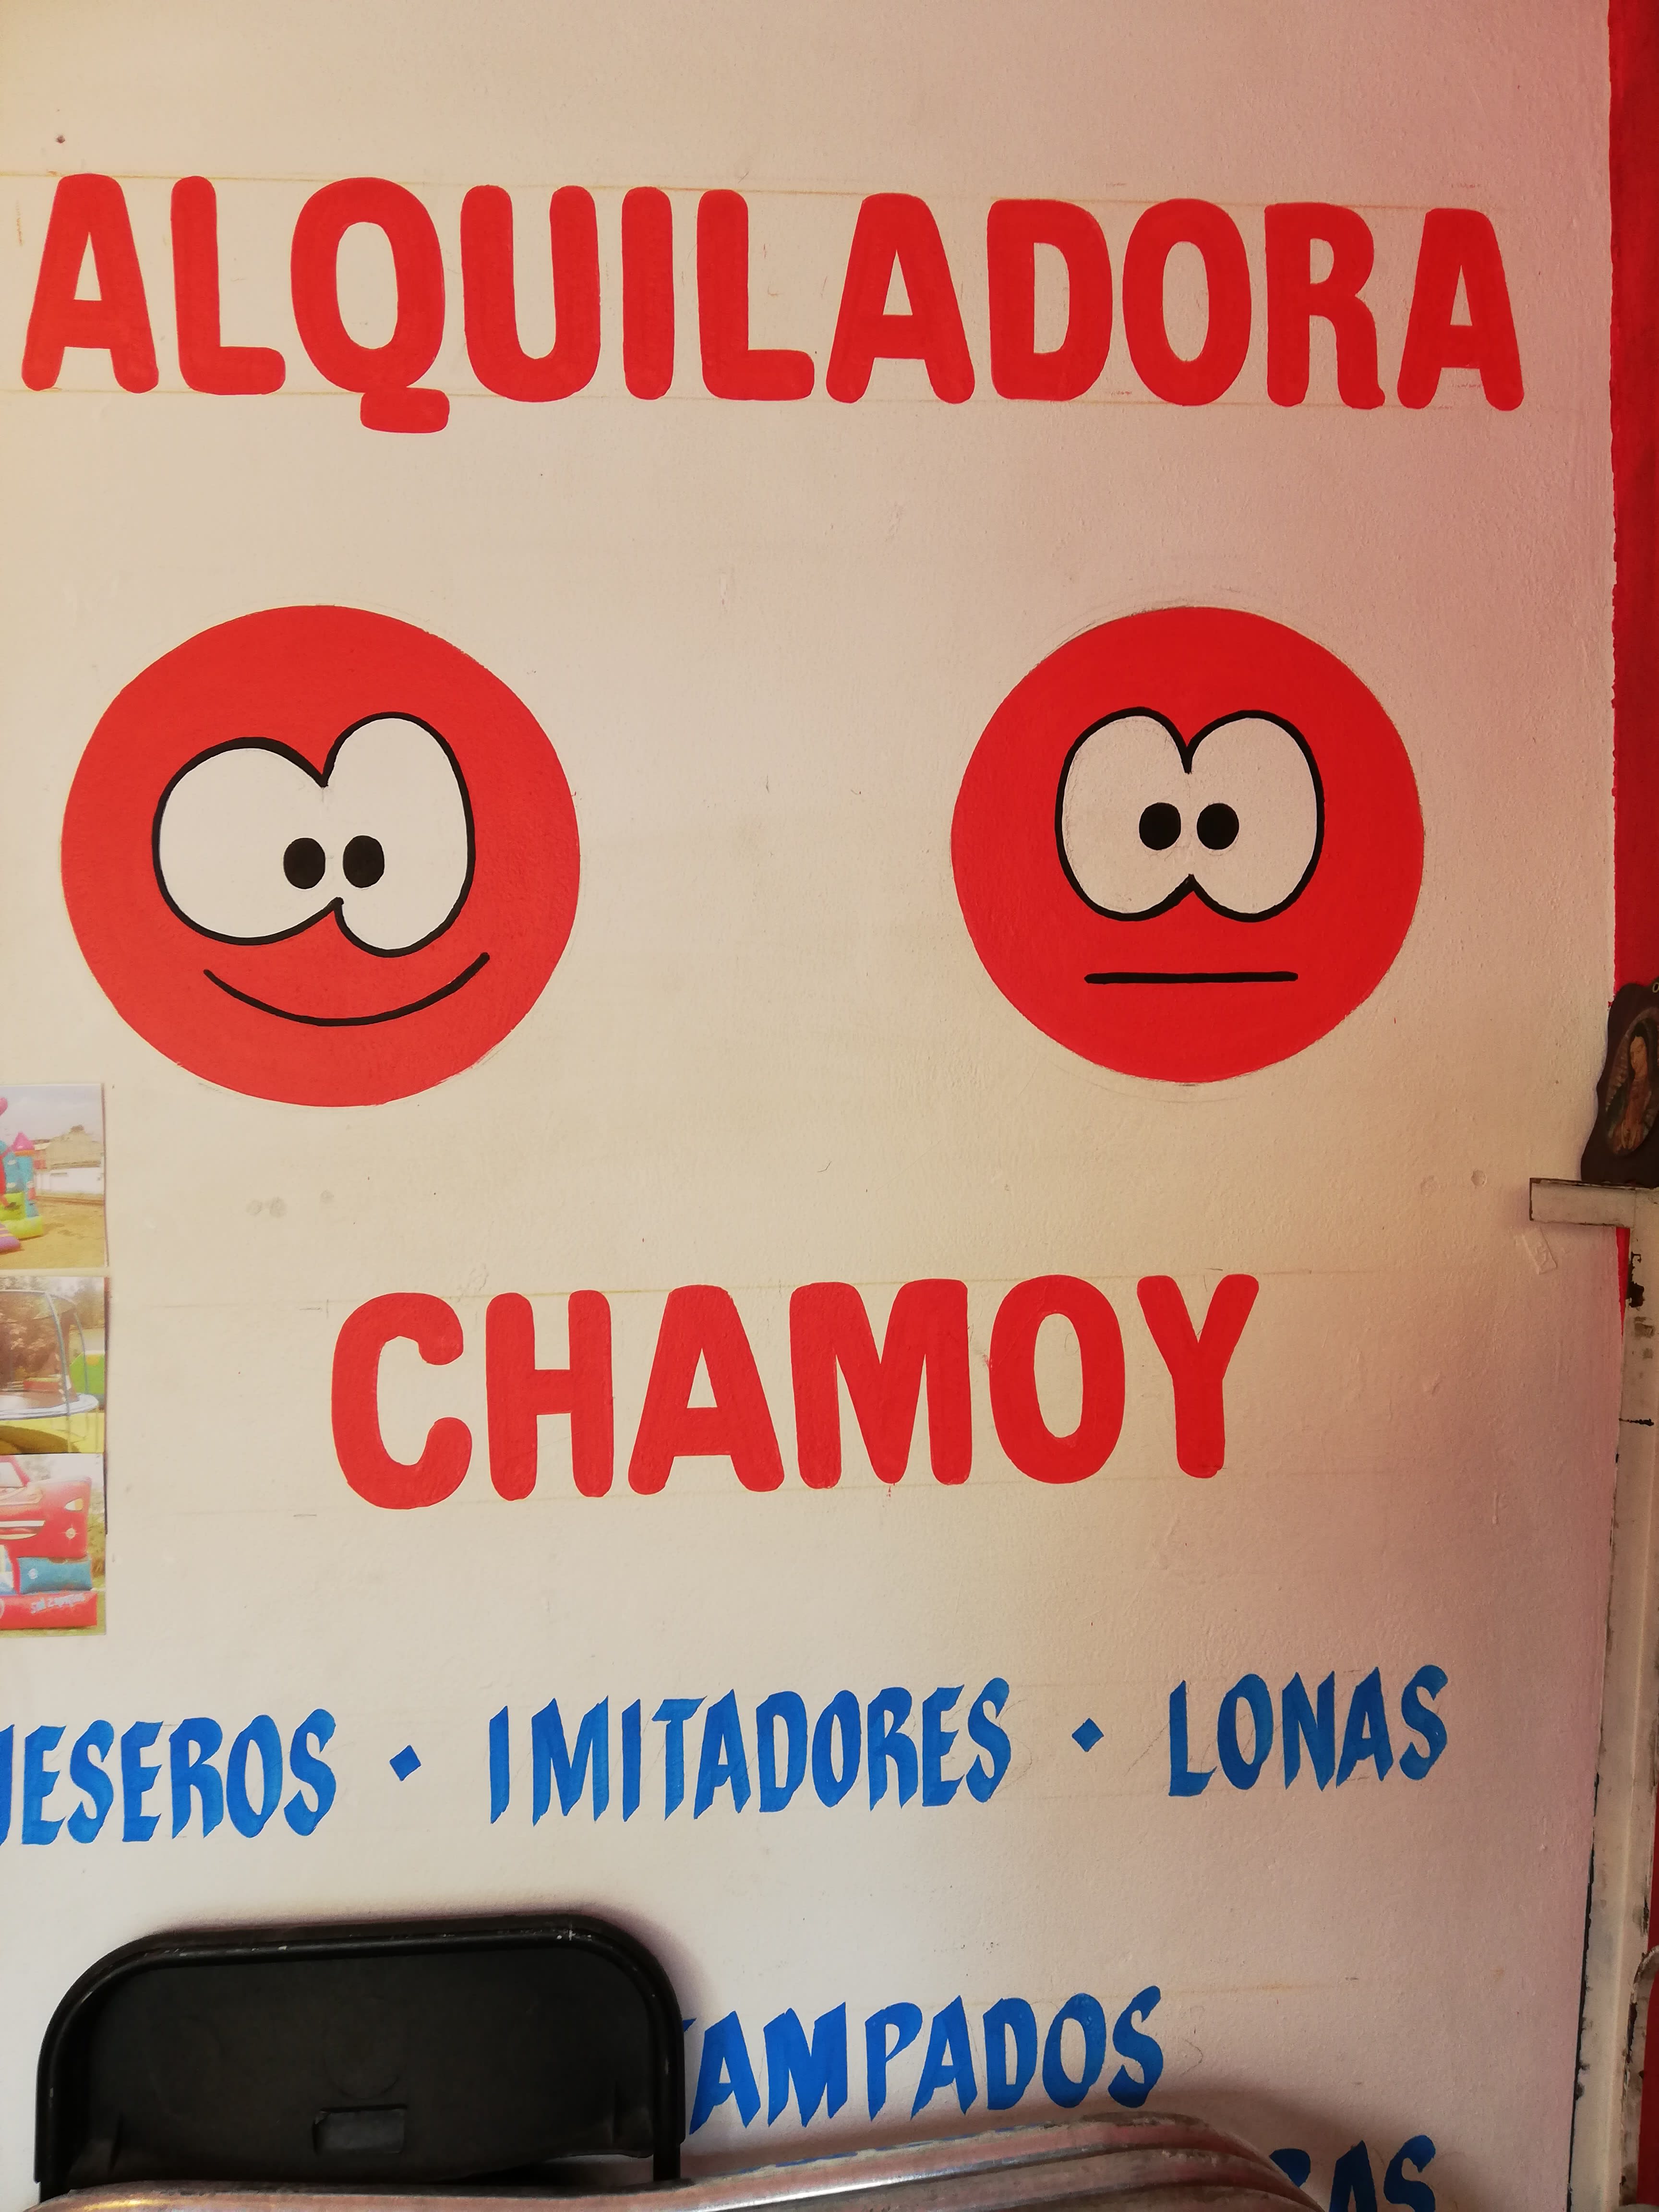 Alquiladora Chamoy